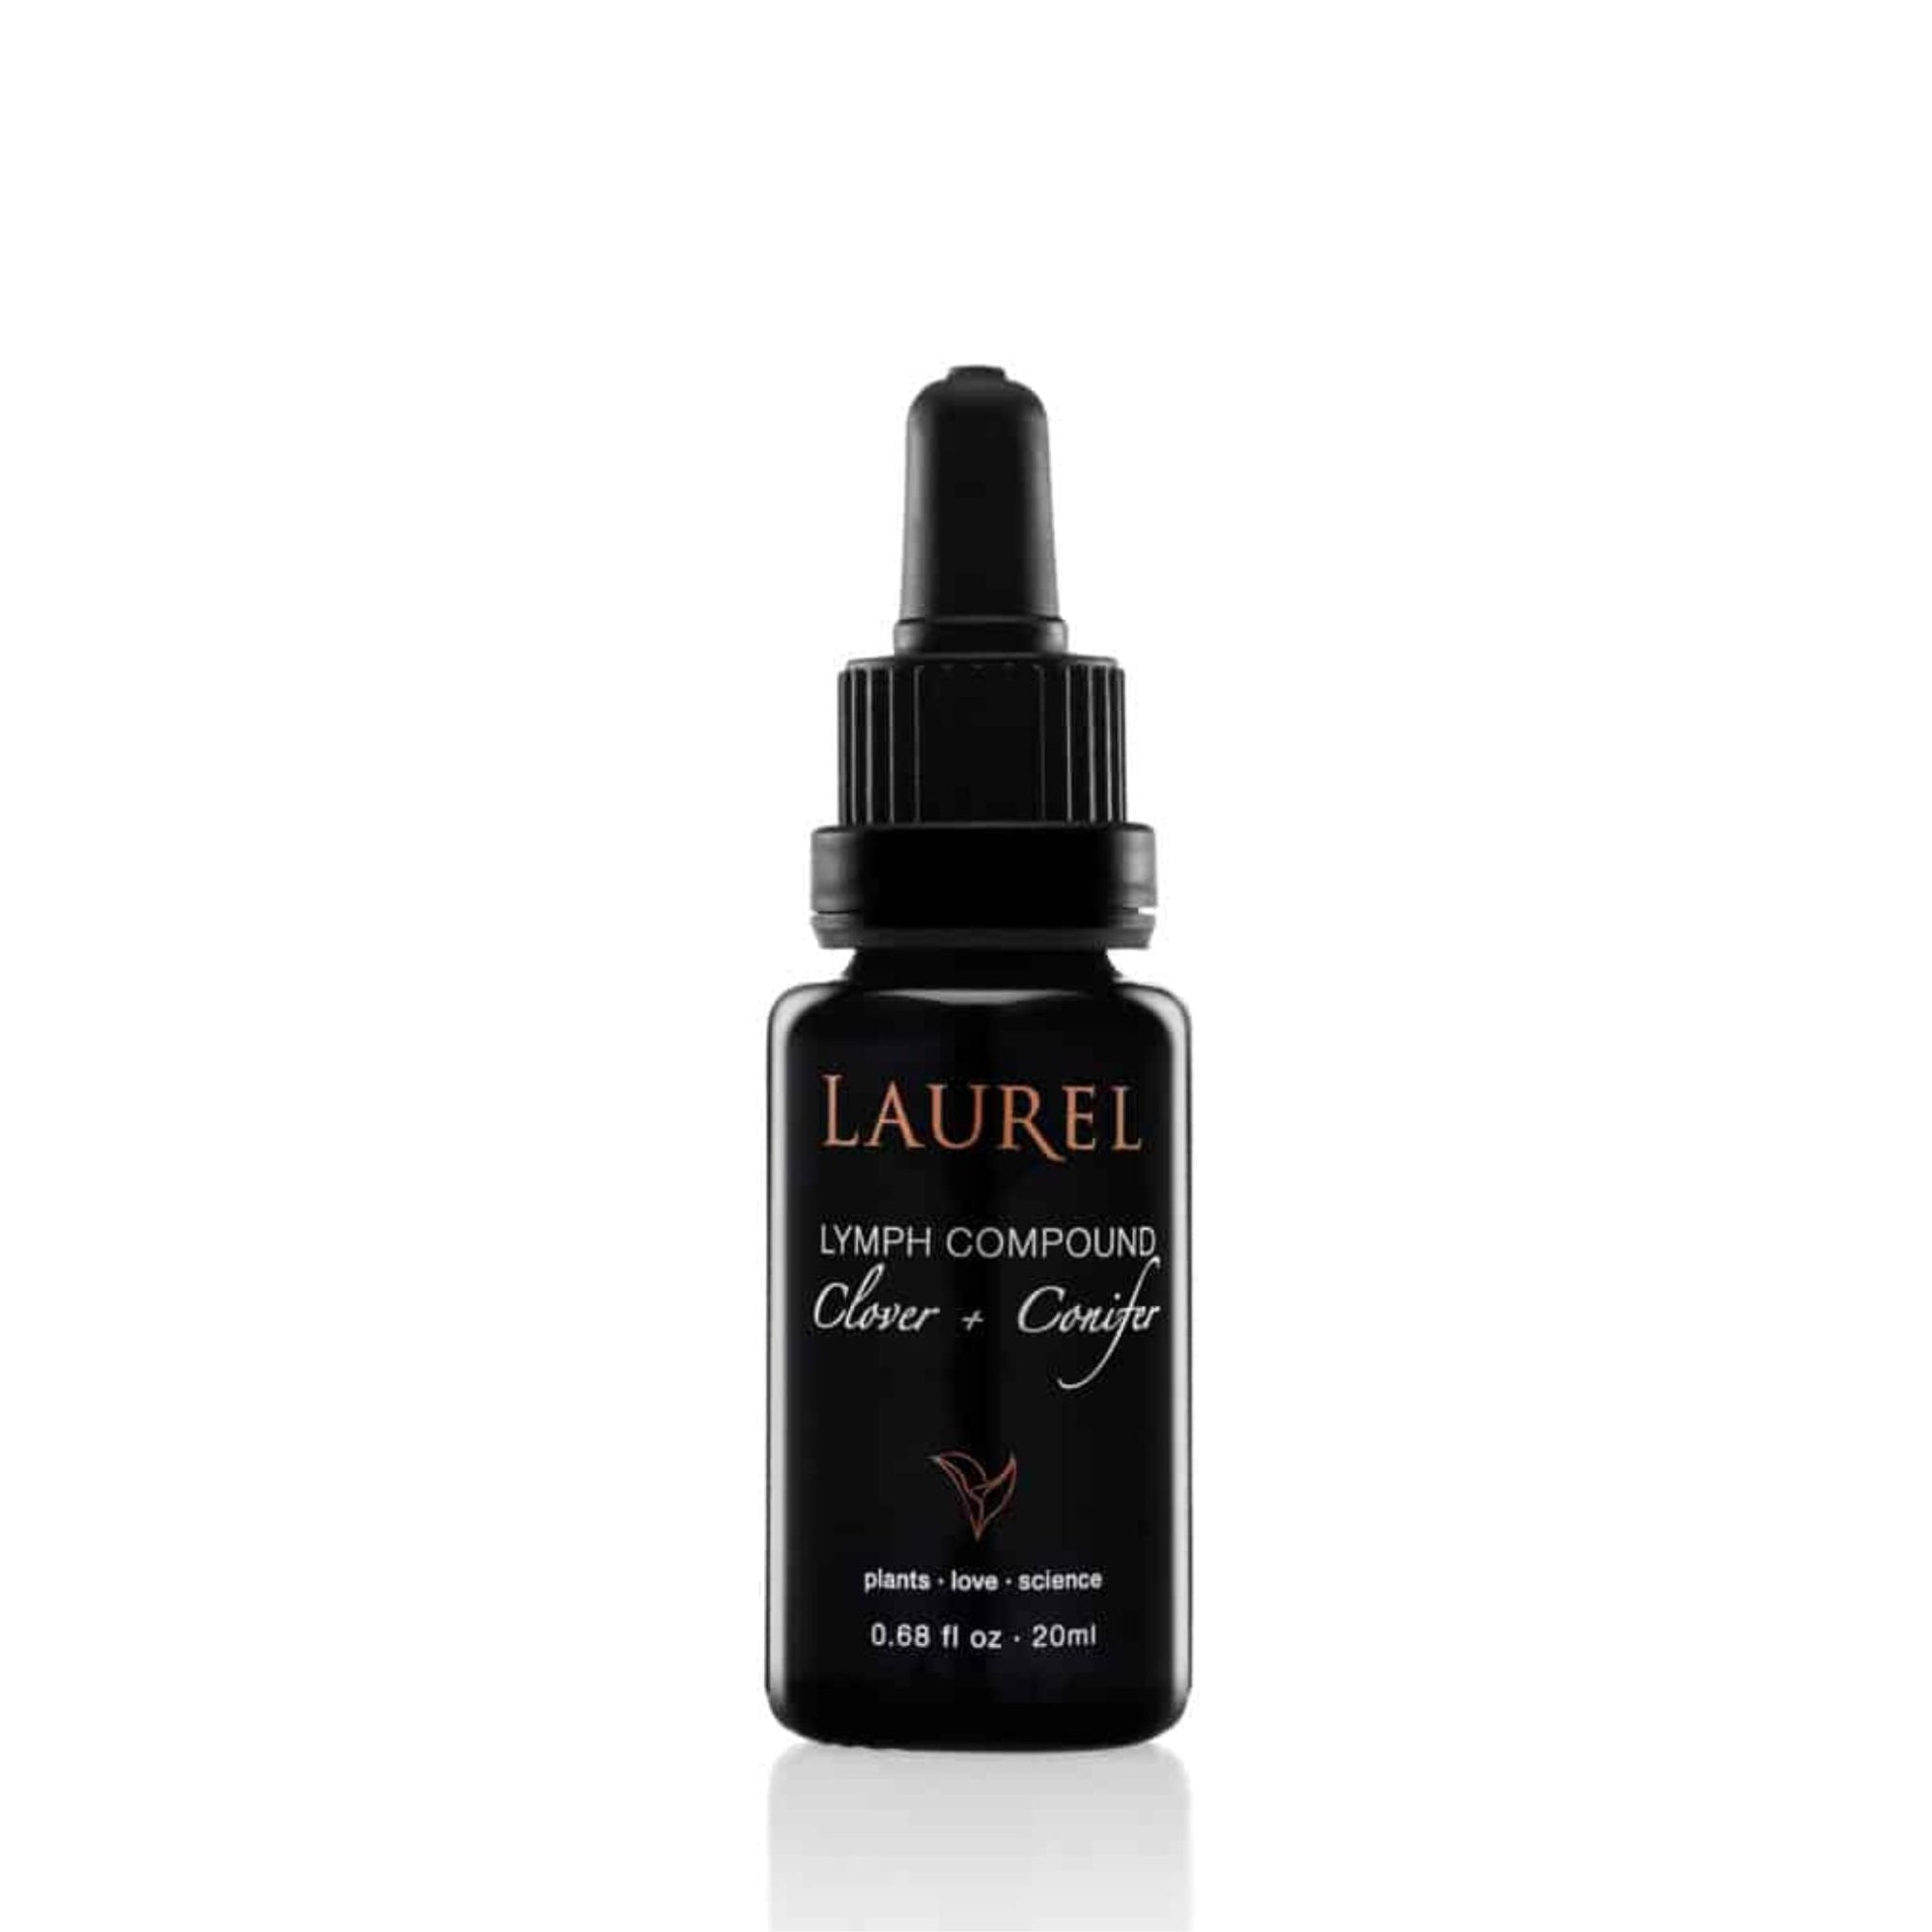 Laurel Skin - Laurel Lymph Compound Clover + Conifer - ORESTA clean beauty simplified